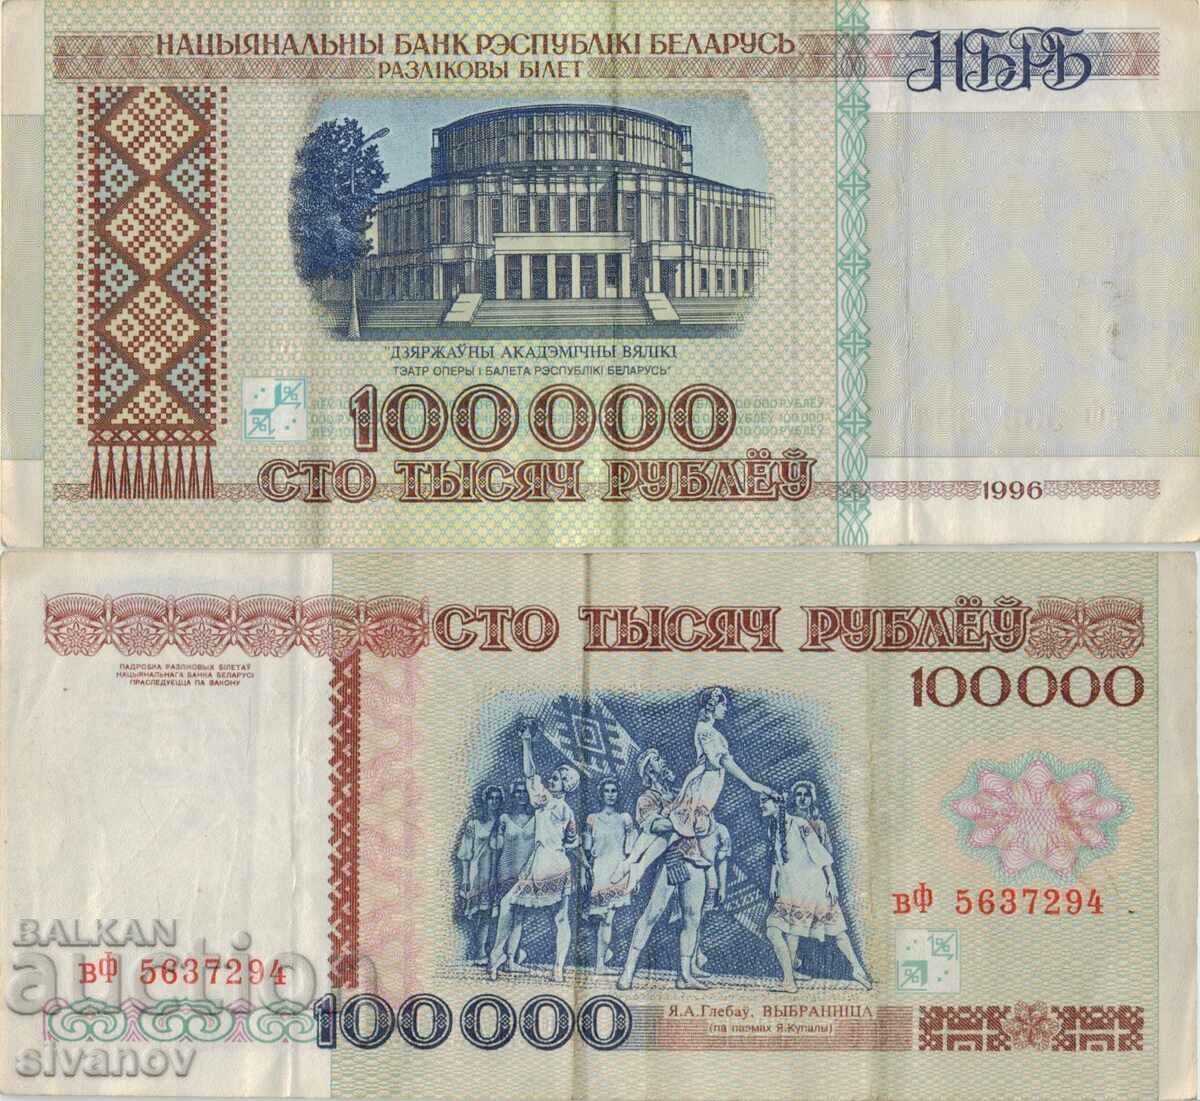 Belarus 100.000 de ruble 1996 bancnota #5132